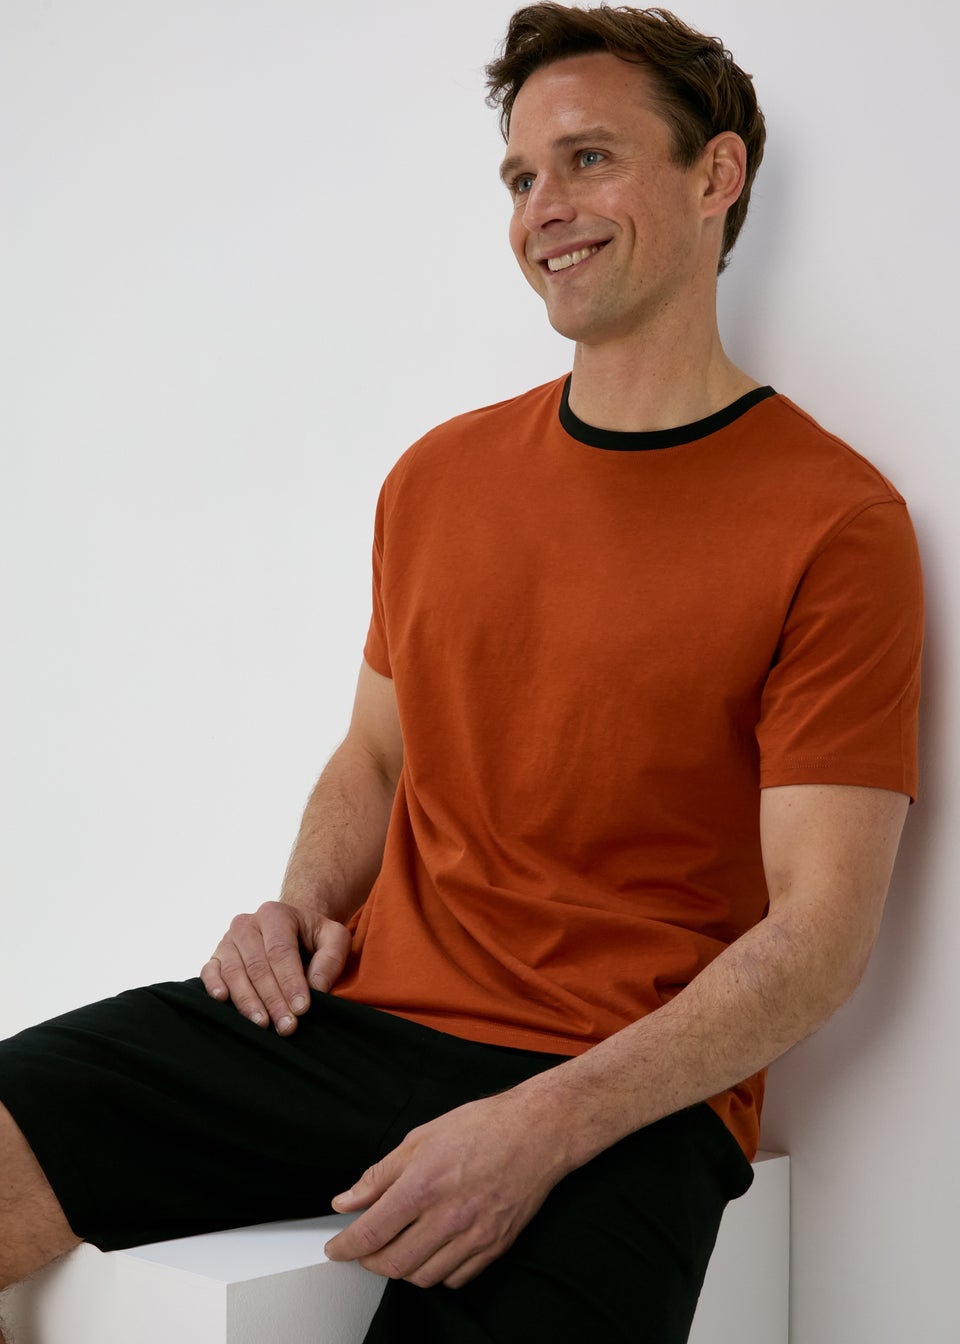 Orange Basic T-Shirt & Shorts Pyjama Set